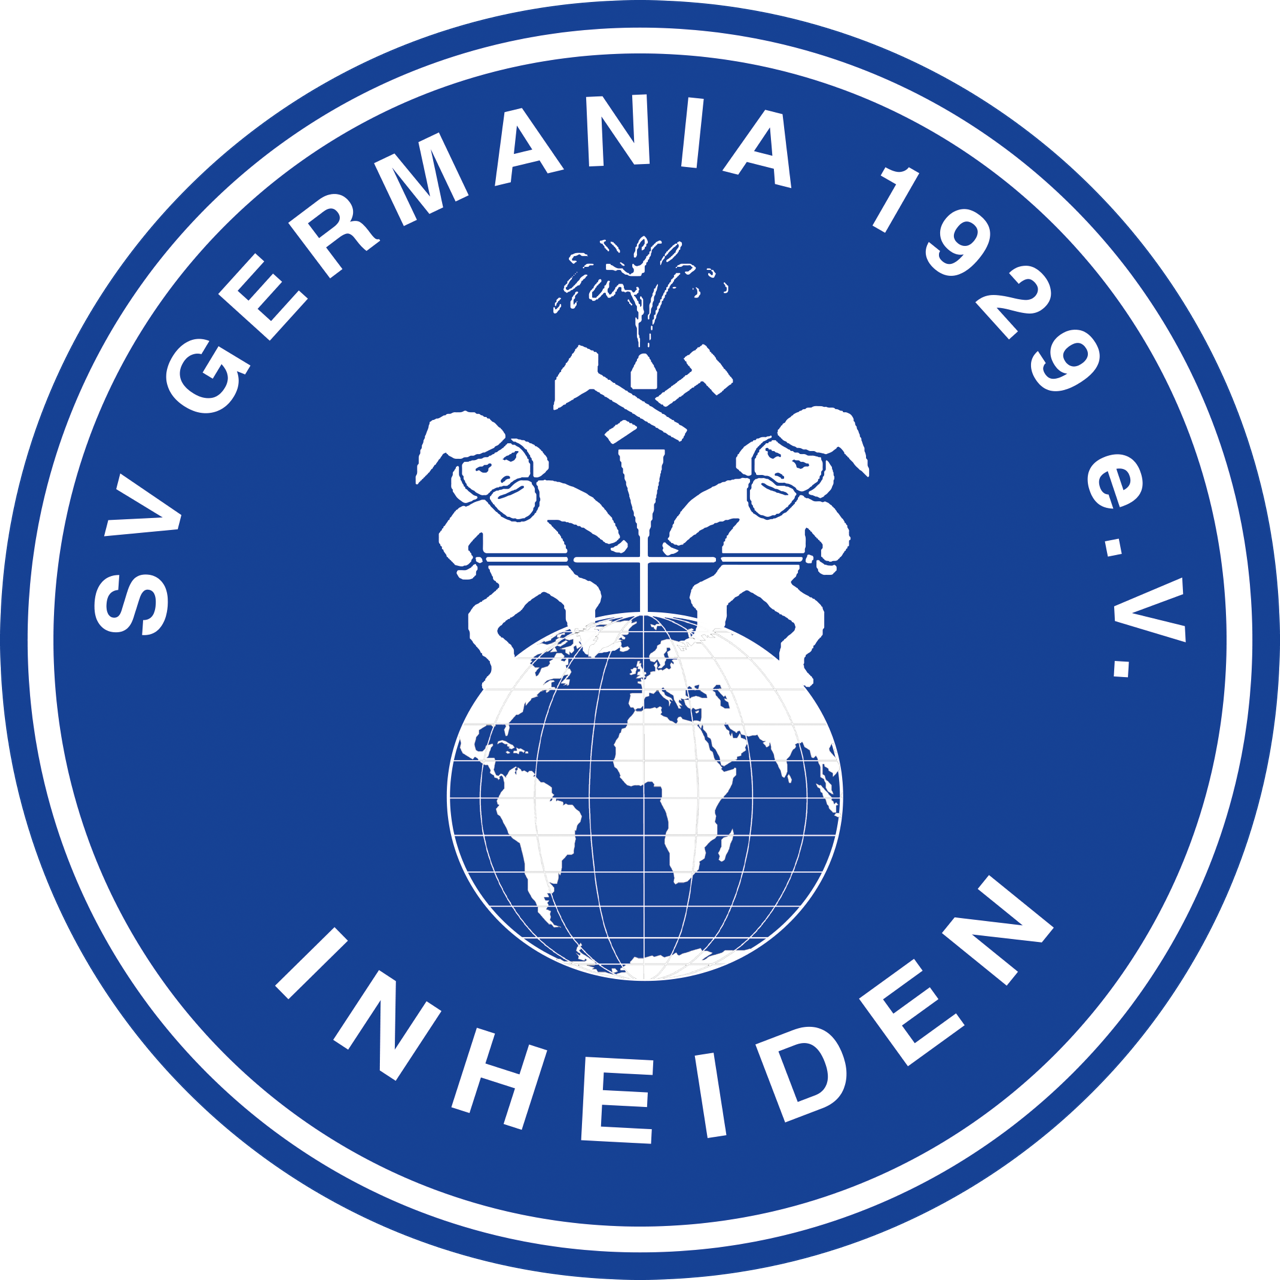                            SV Germania 1929 Inheiden e.V.